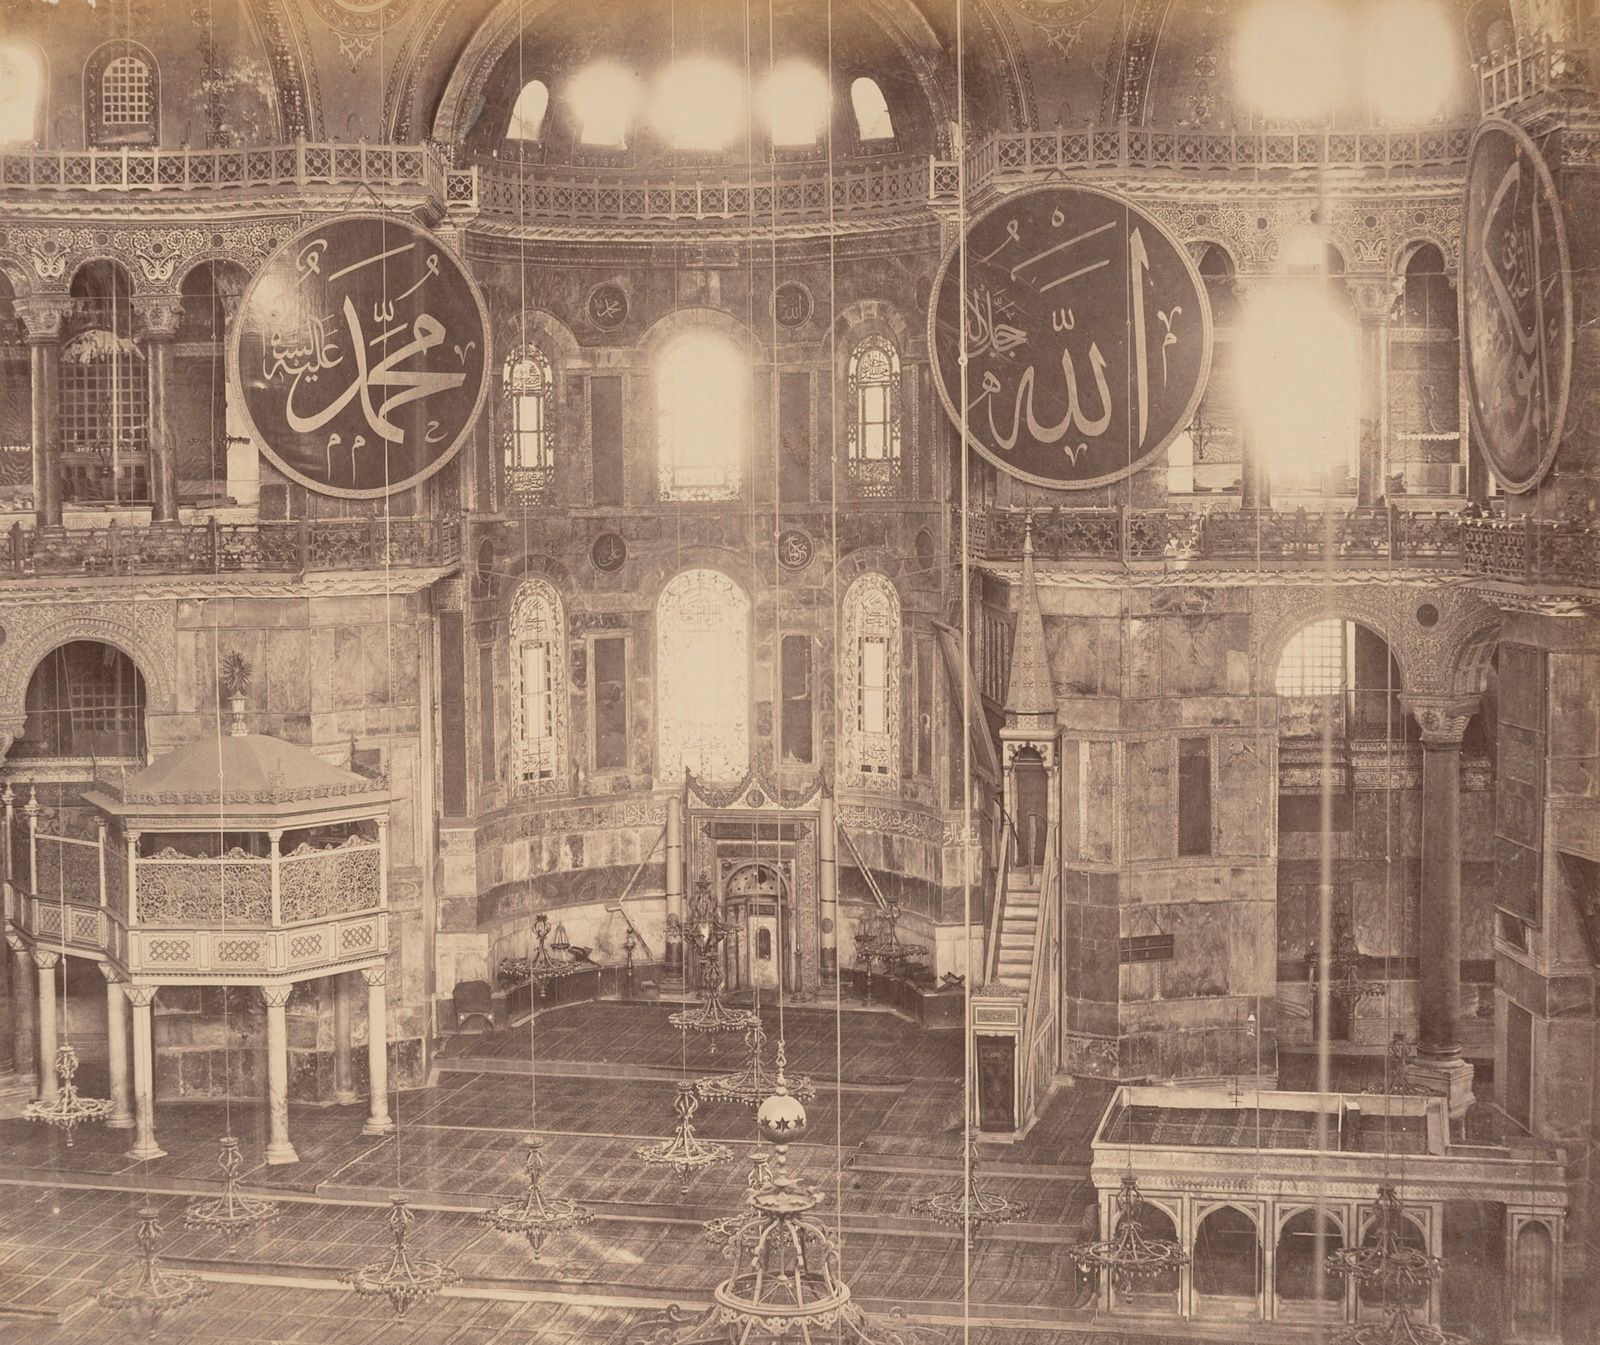 Null 阿布杜拉兄弟的重要摄影作品集

土耳其，君士坦丁堡，约1865年

长方形宽页画册，用黑色珍珠岩装订，包含37张盐渍铝化纸和蛋白纸上的照片。装订的书脊&hellip;